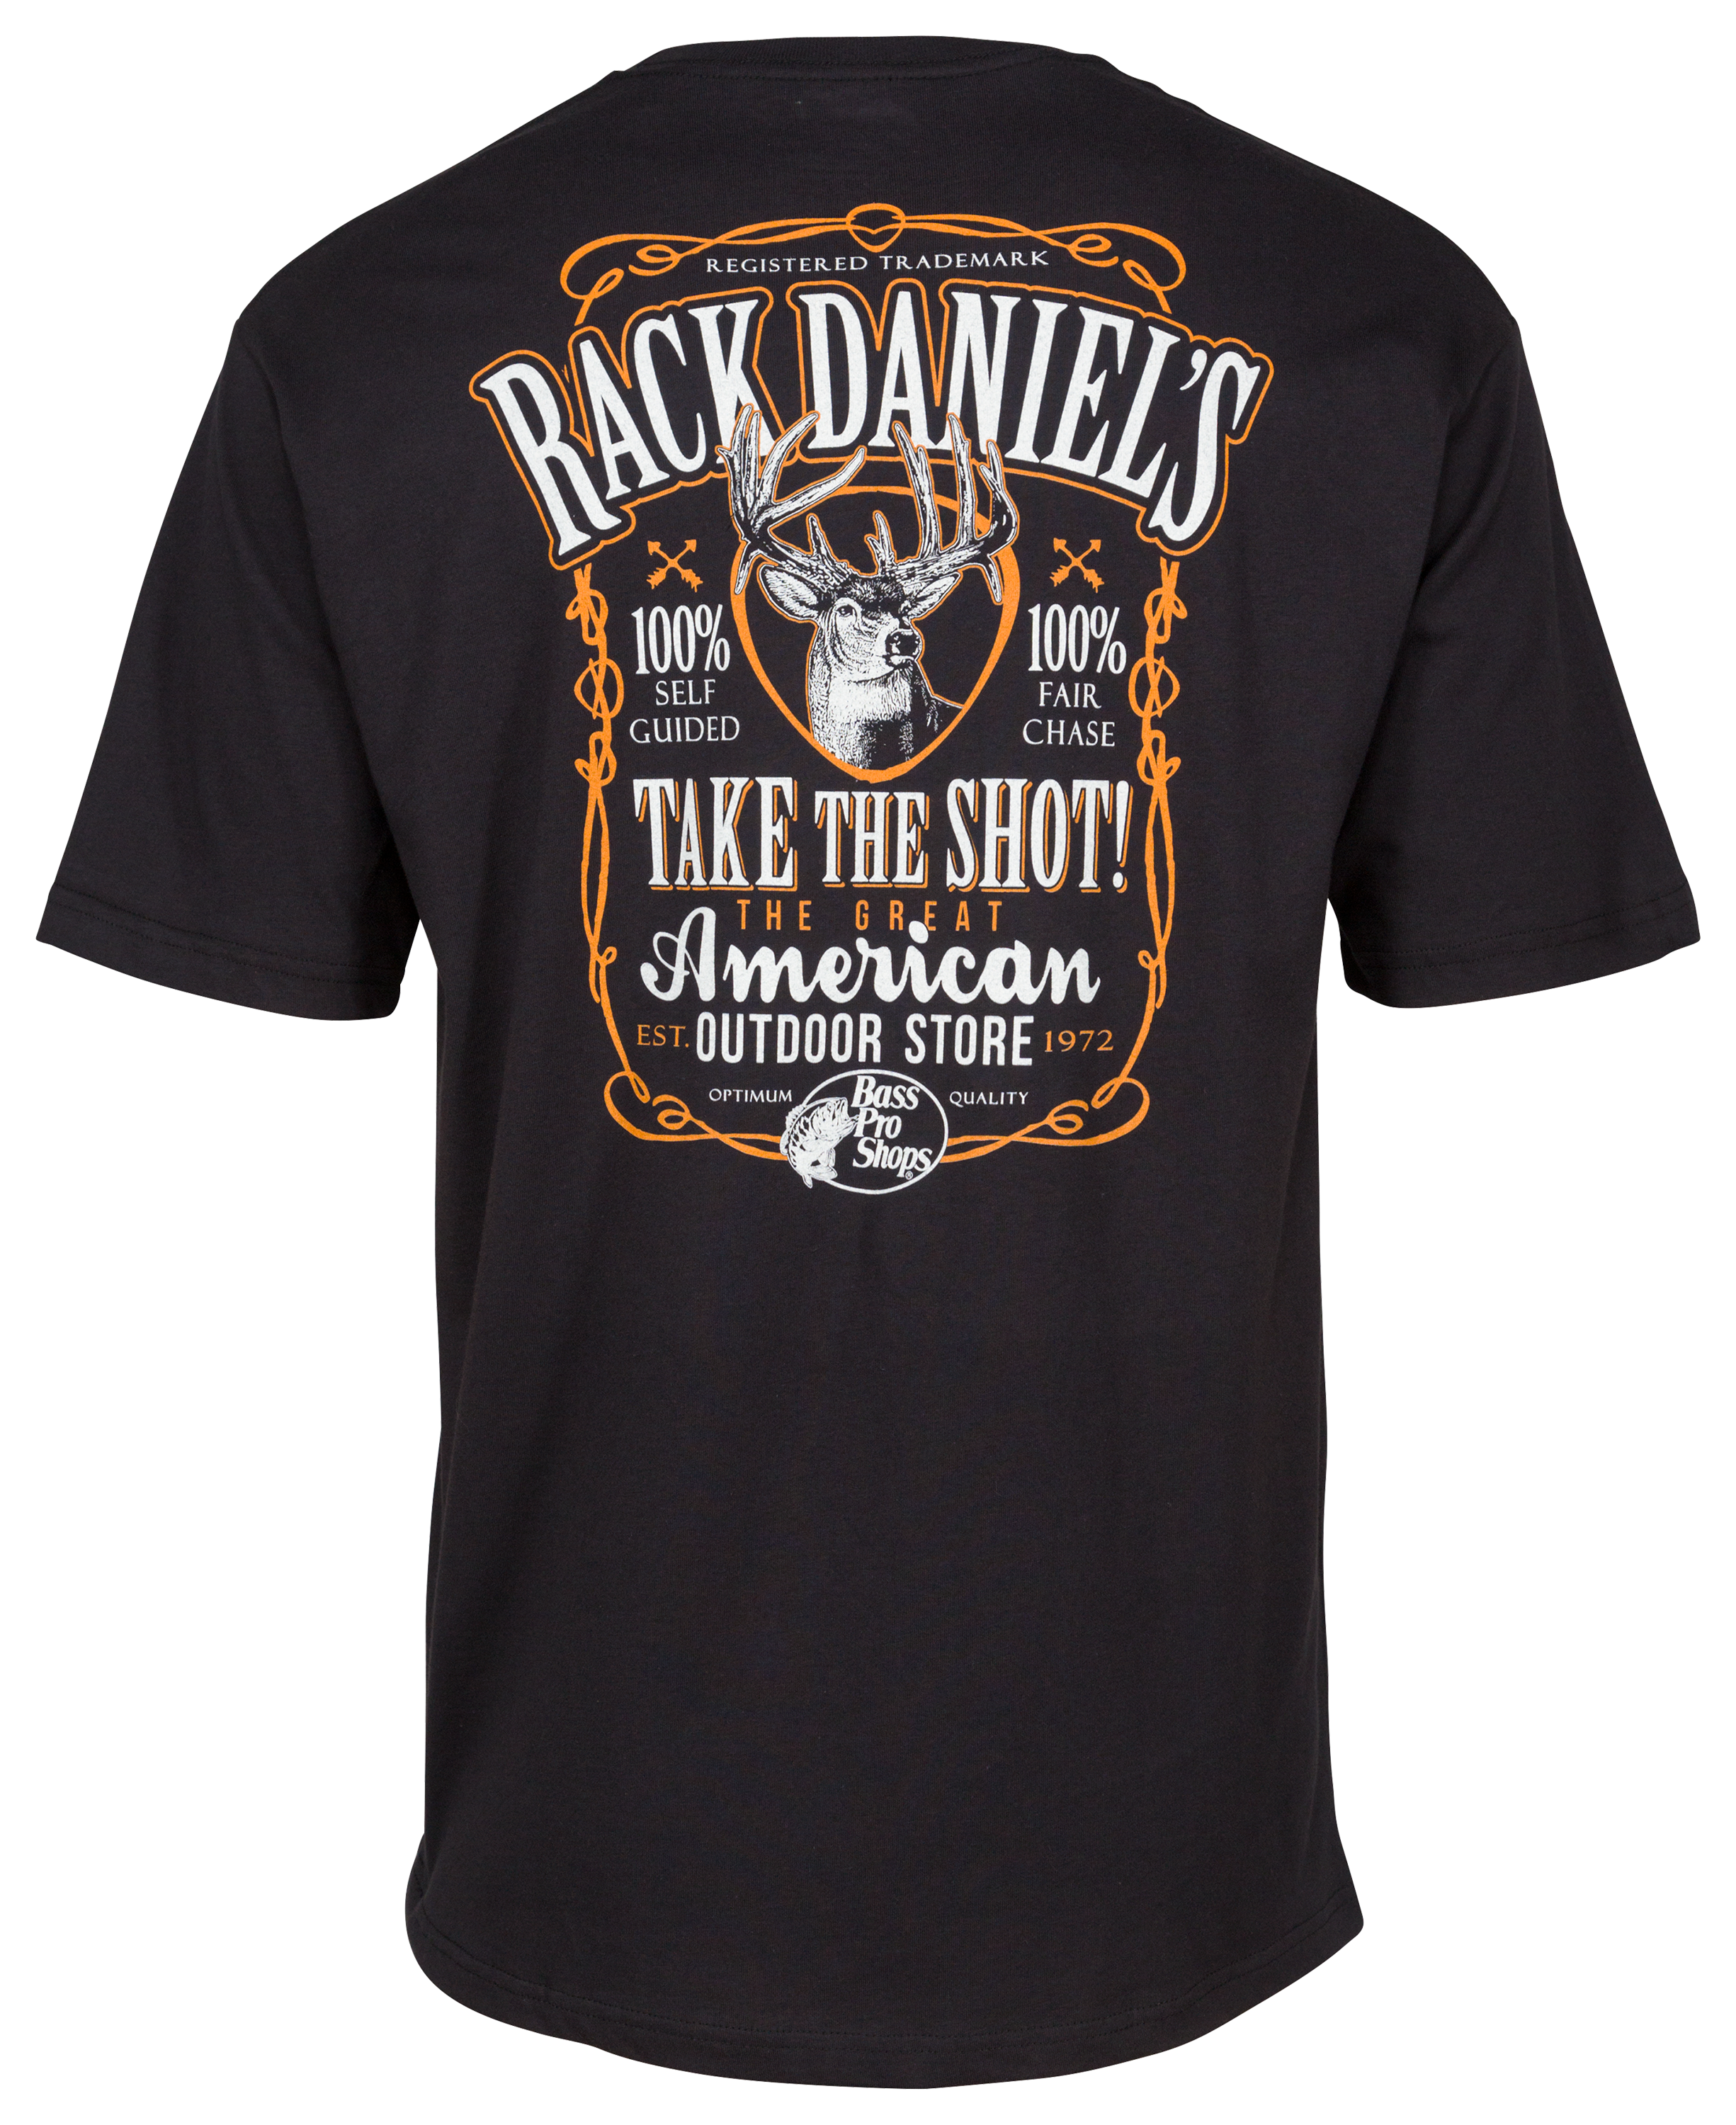 Bass Pro Shops Rack Daniel's II Short-Sleeve T-Shirt for Men